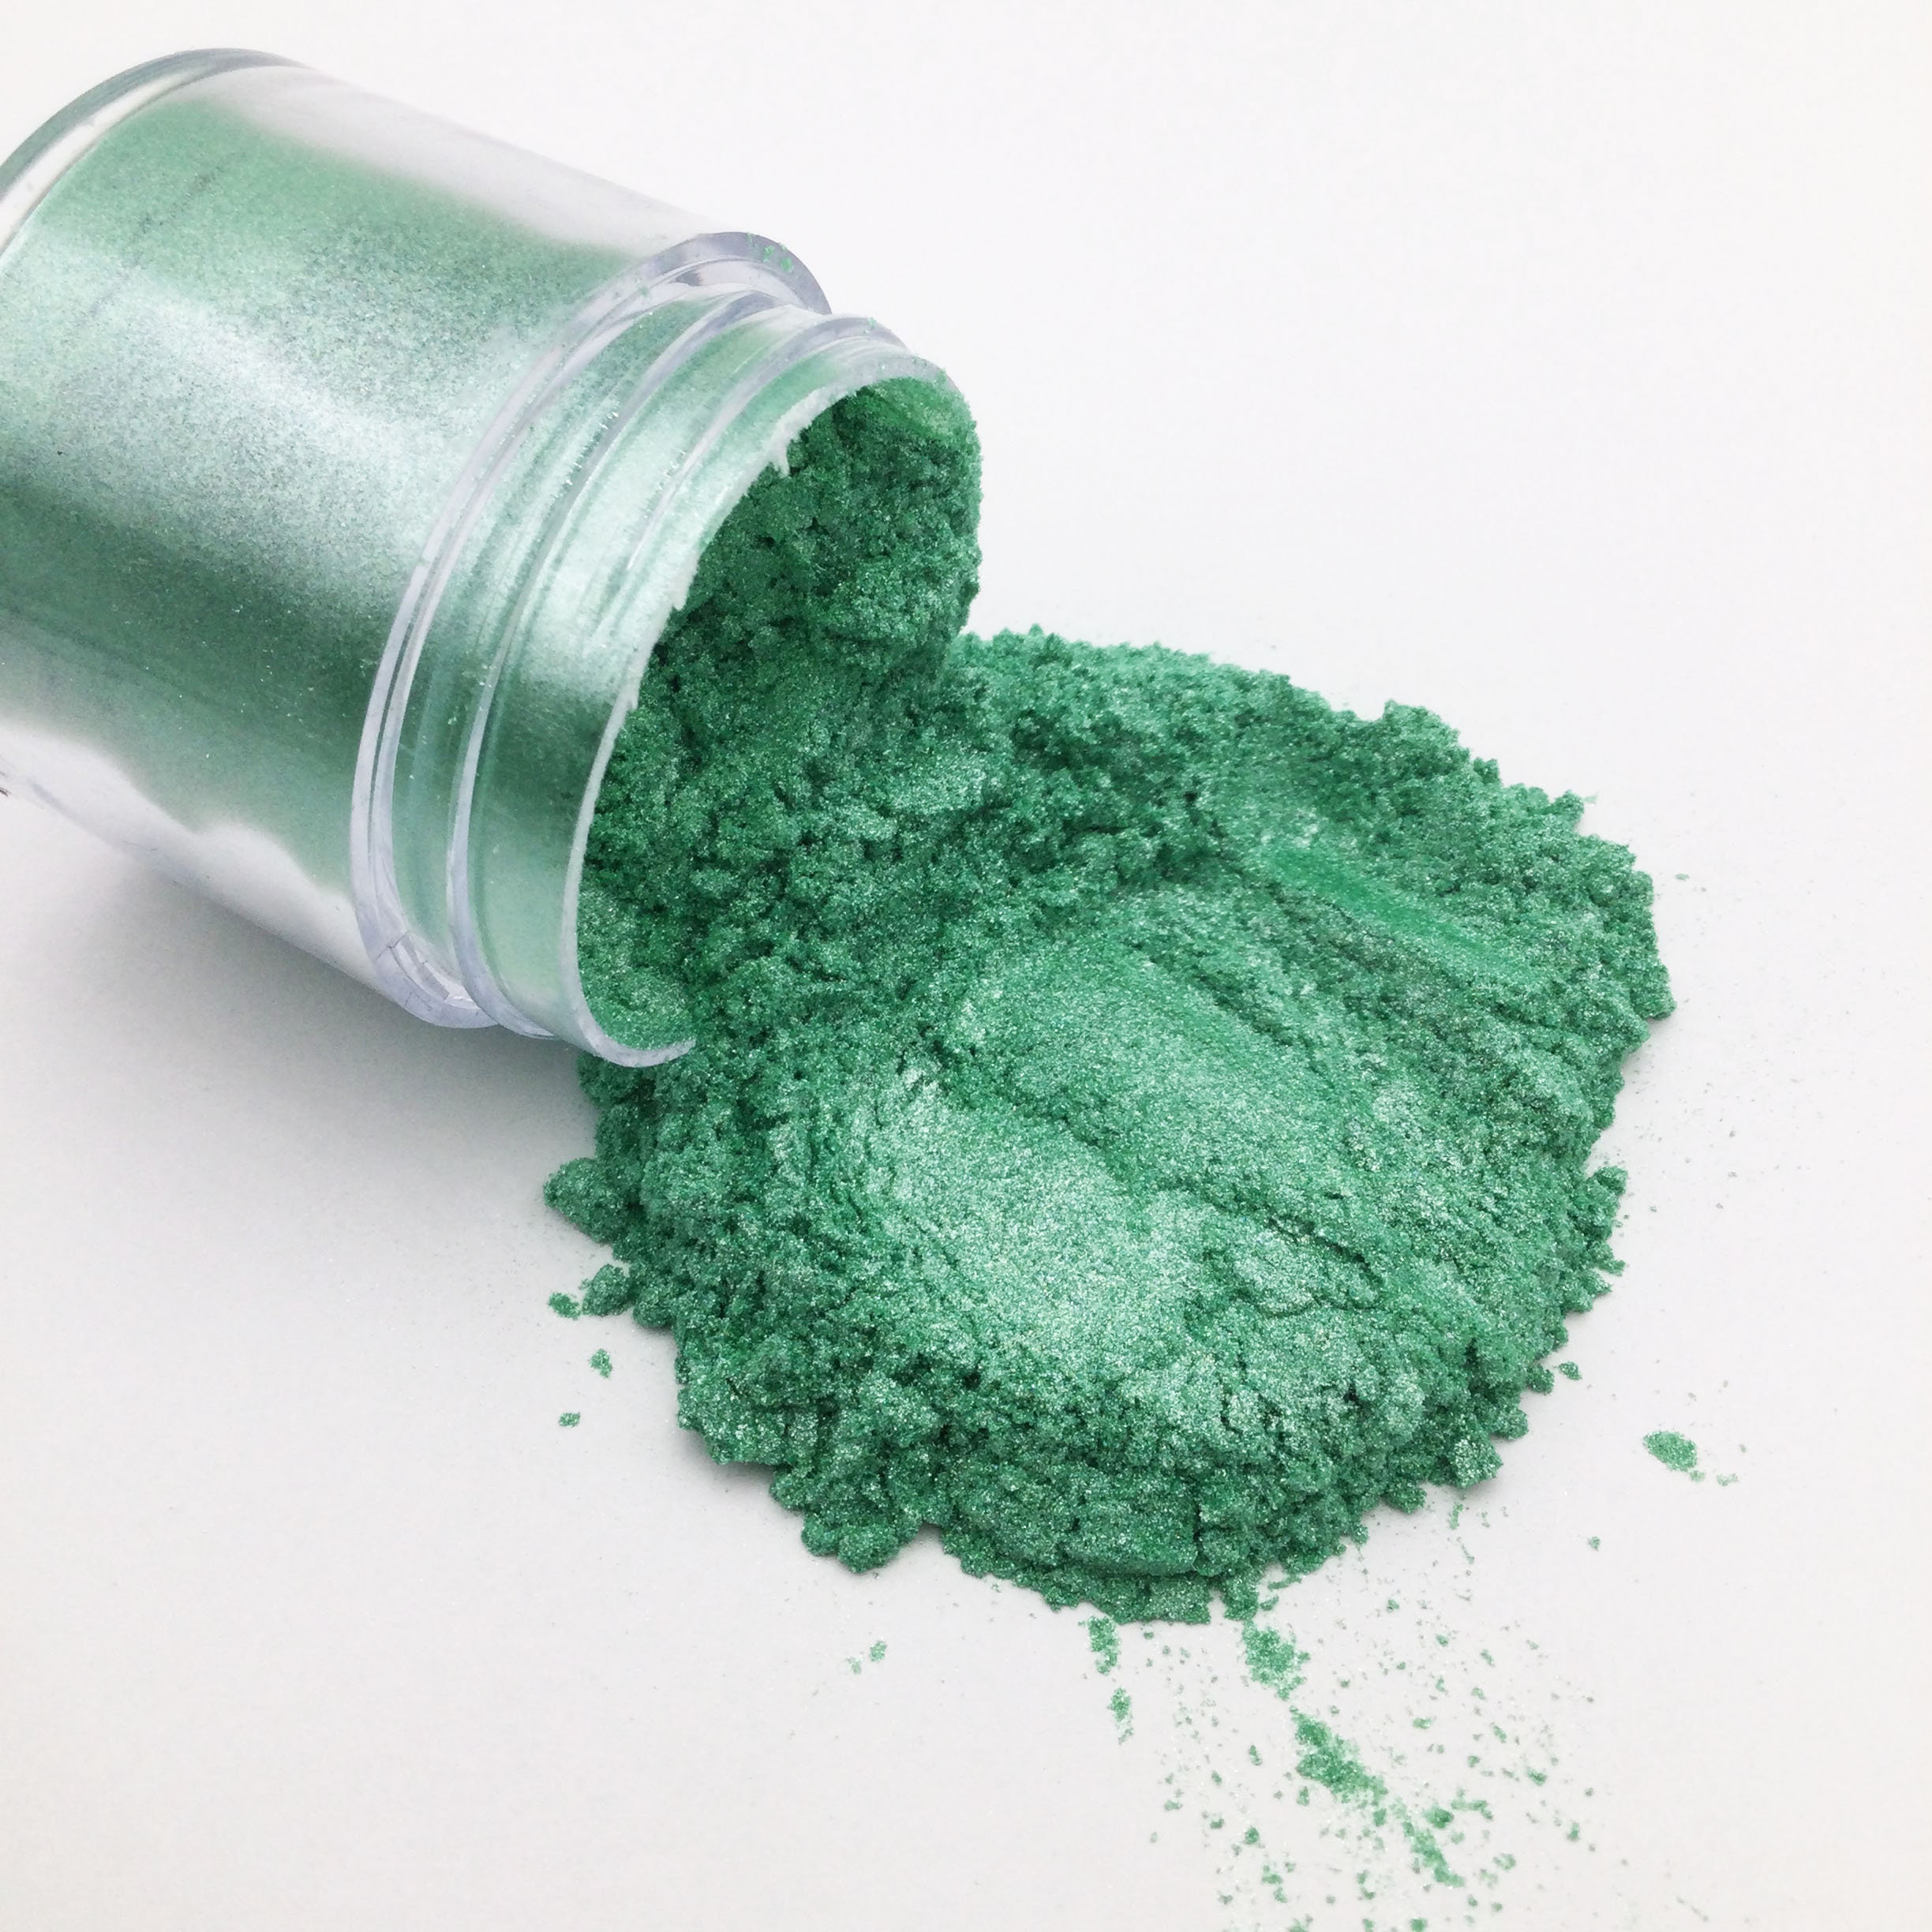 Hot Selling Cosmetic Grade Mica Powder Soap Making Pigment Powder - China Cosmetic  Powder, Nail Art Pigment